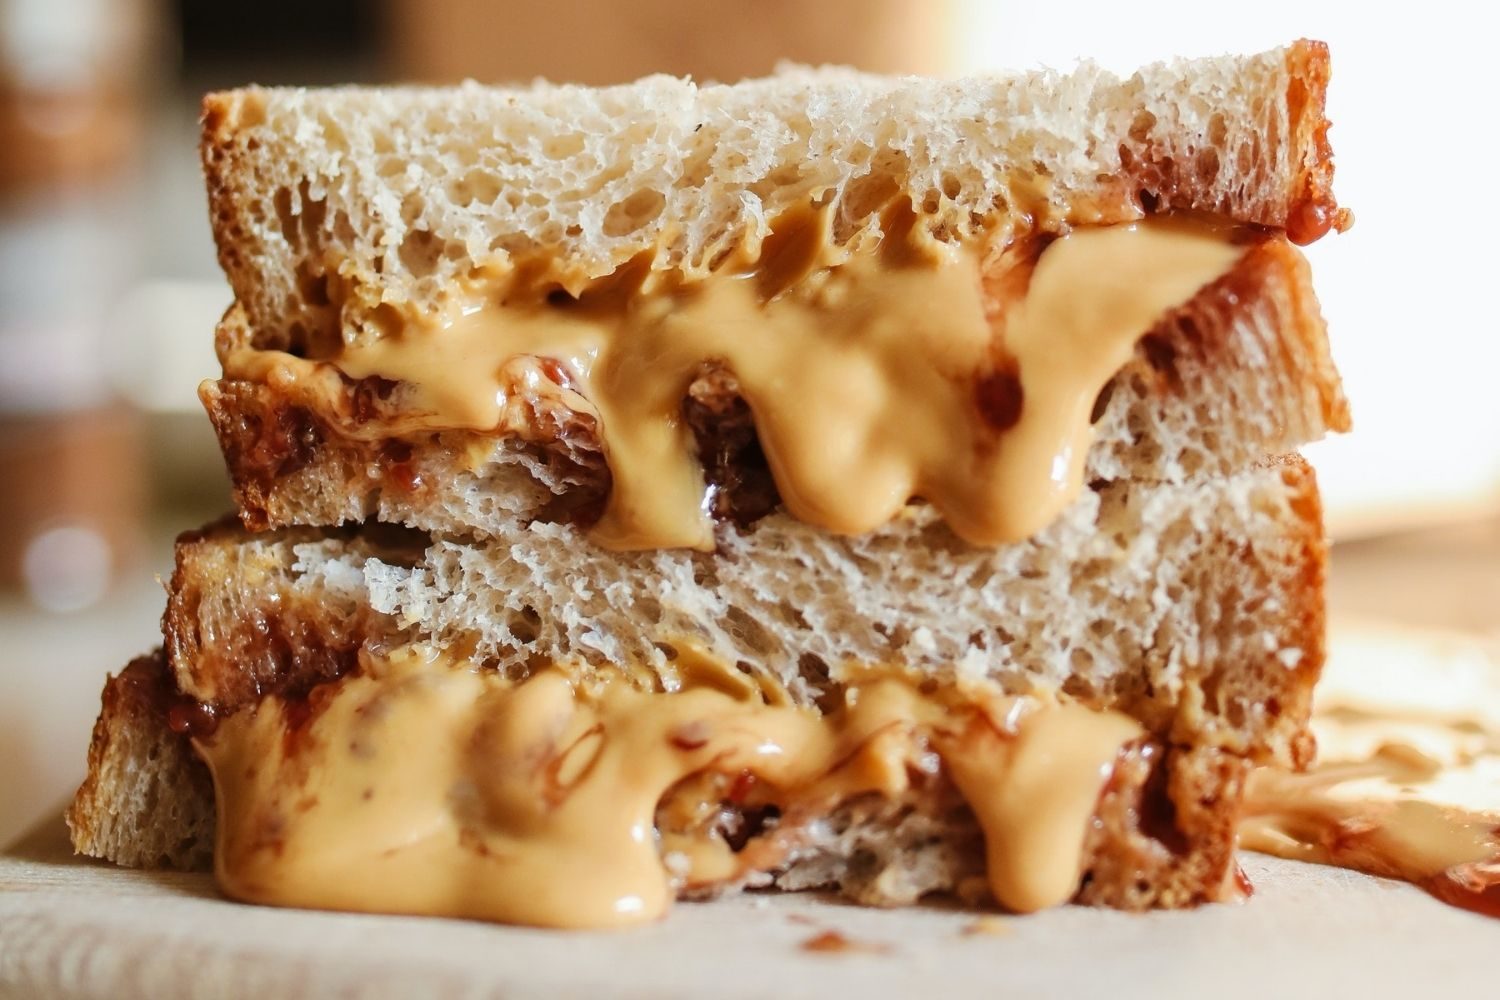 Classic Peanut Butter And Jam Sandwich